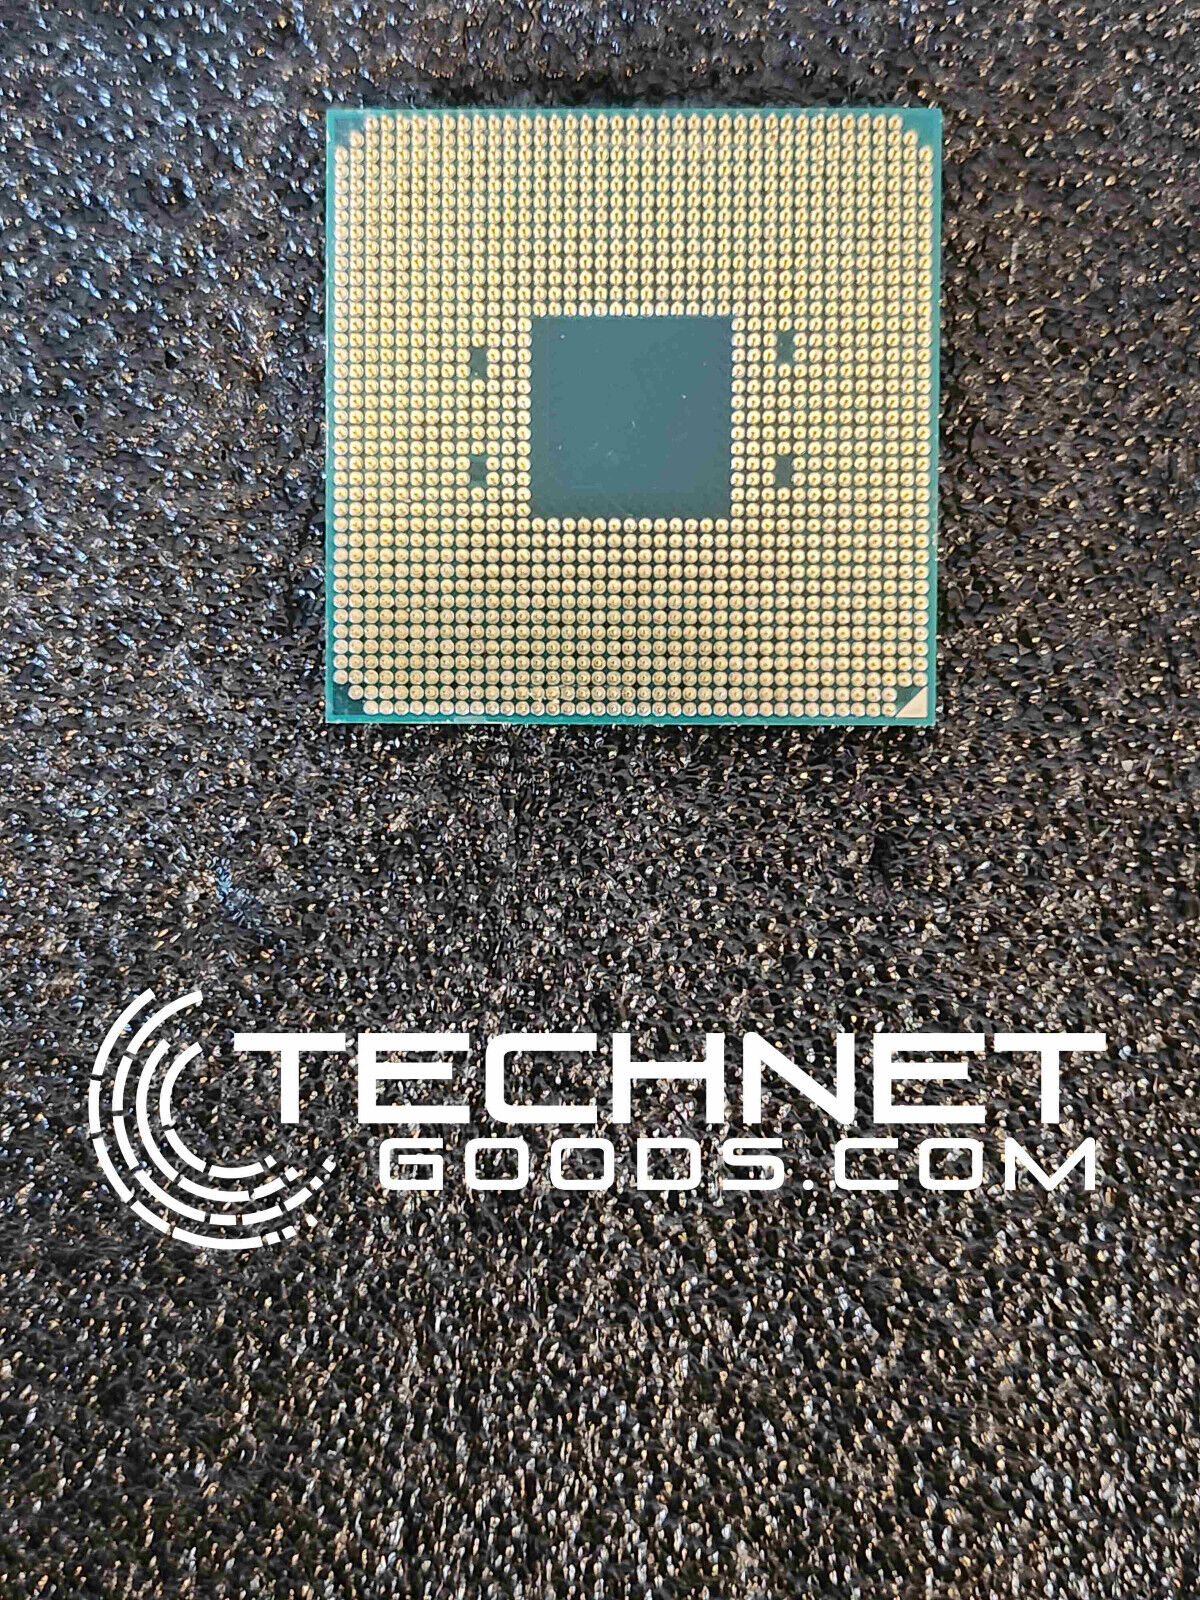 AMD Ryzen 5 2600 3.4GHz (TURBO 3.9GHz) 6-Core AM4 - TESTED